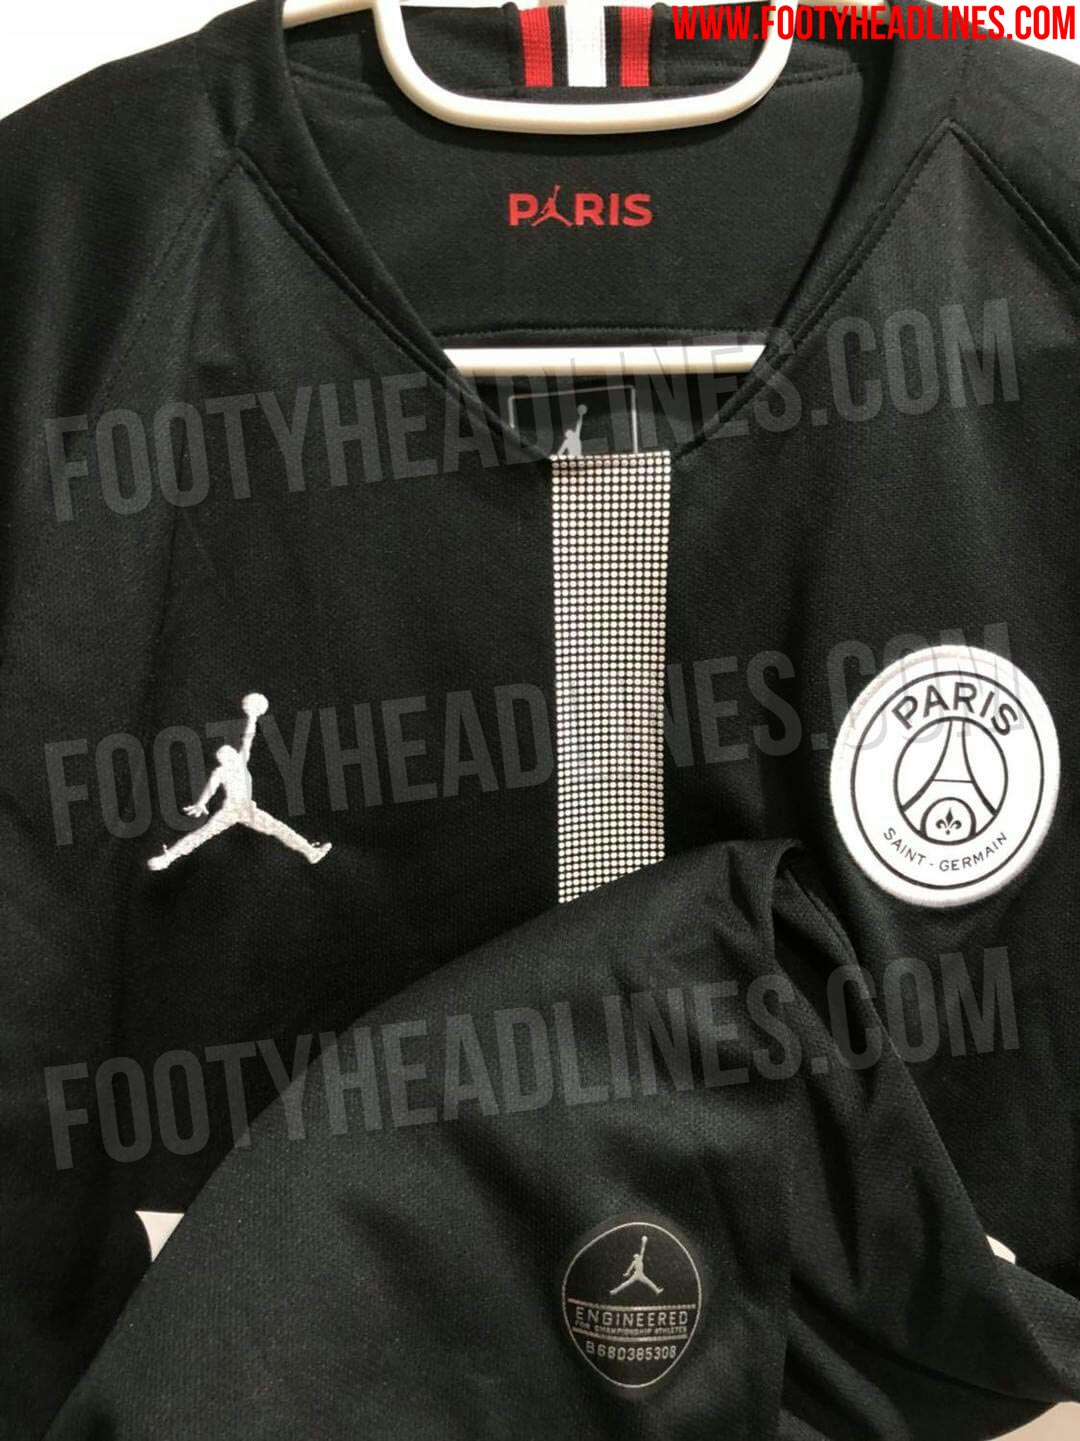 Jordan PSG 1819 Champions League Kits Leaked  Already on Sale + New